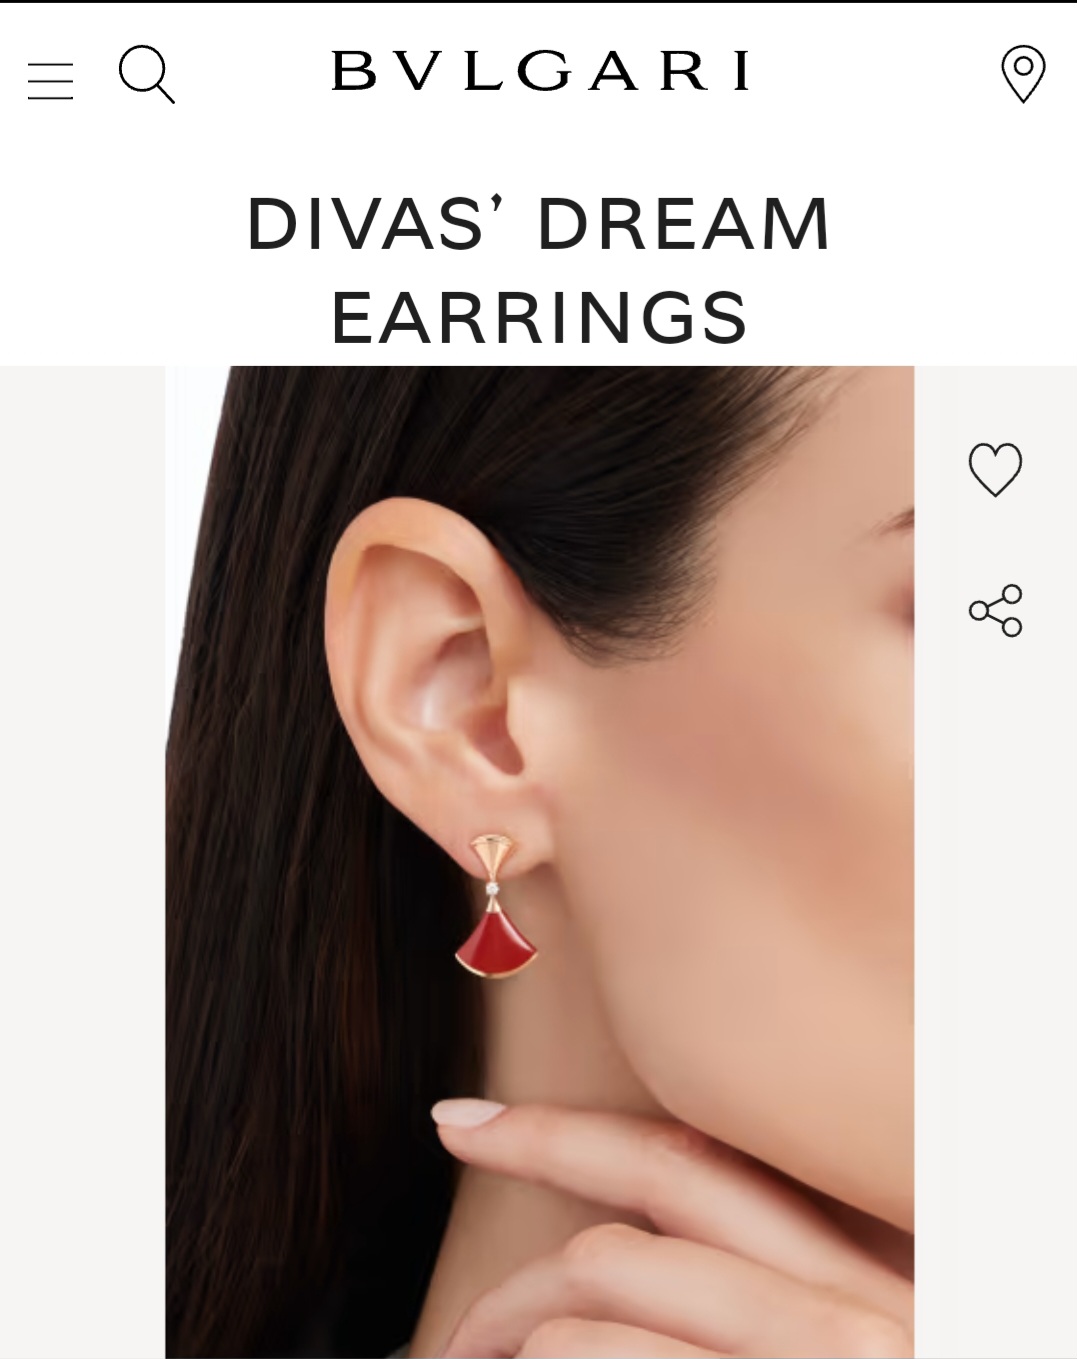 Bvlgari Divas’ dream earrings